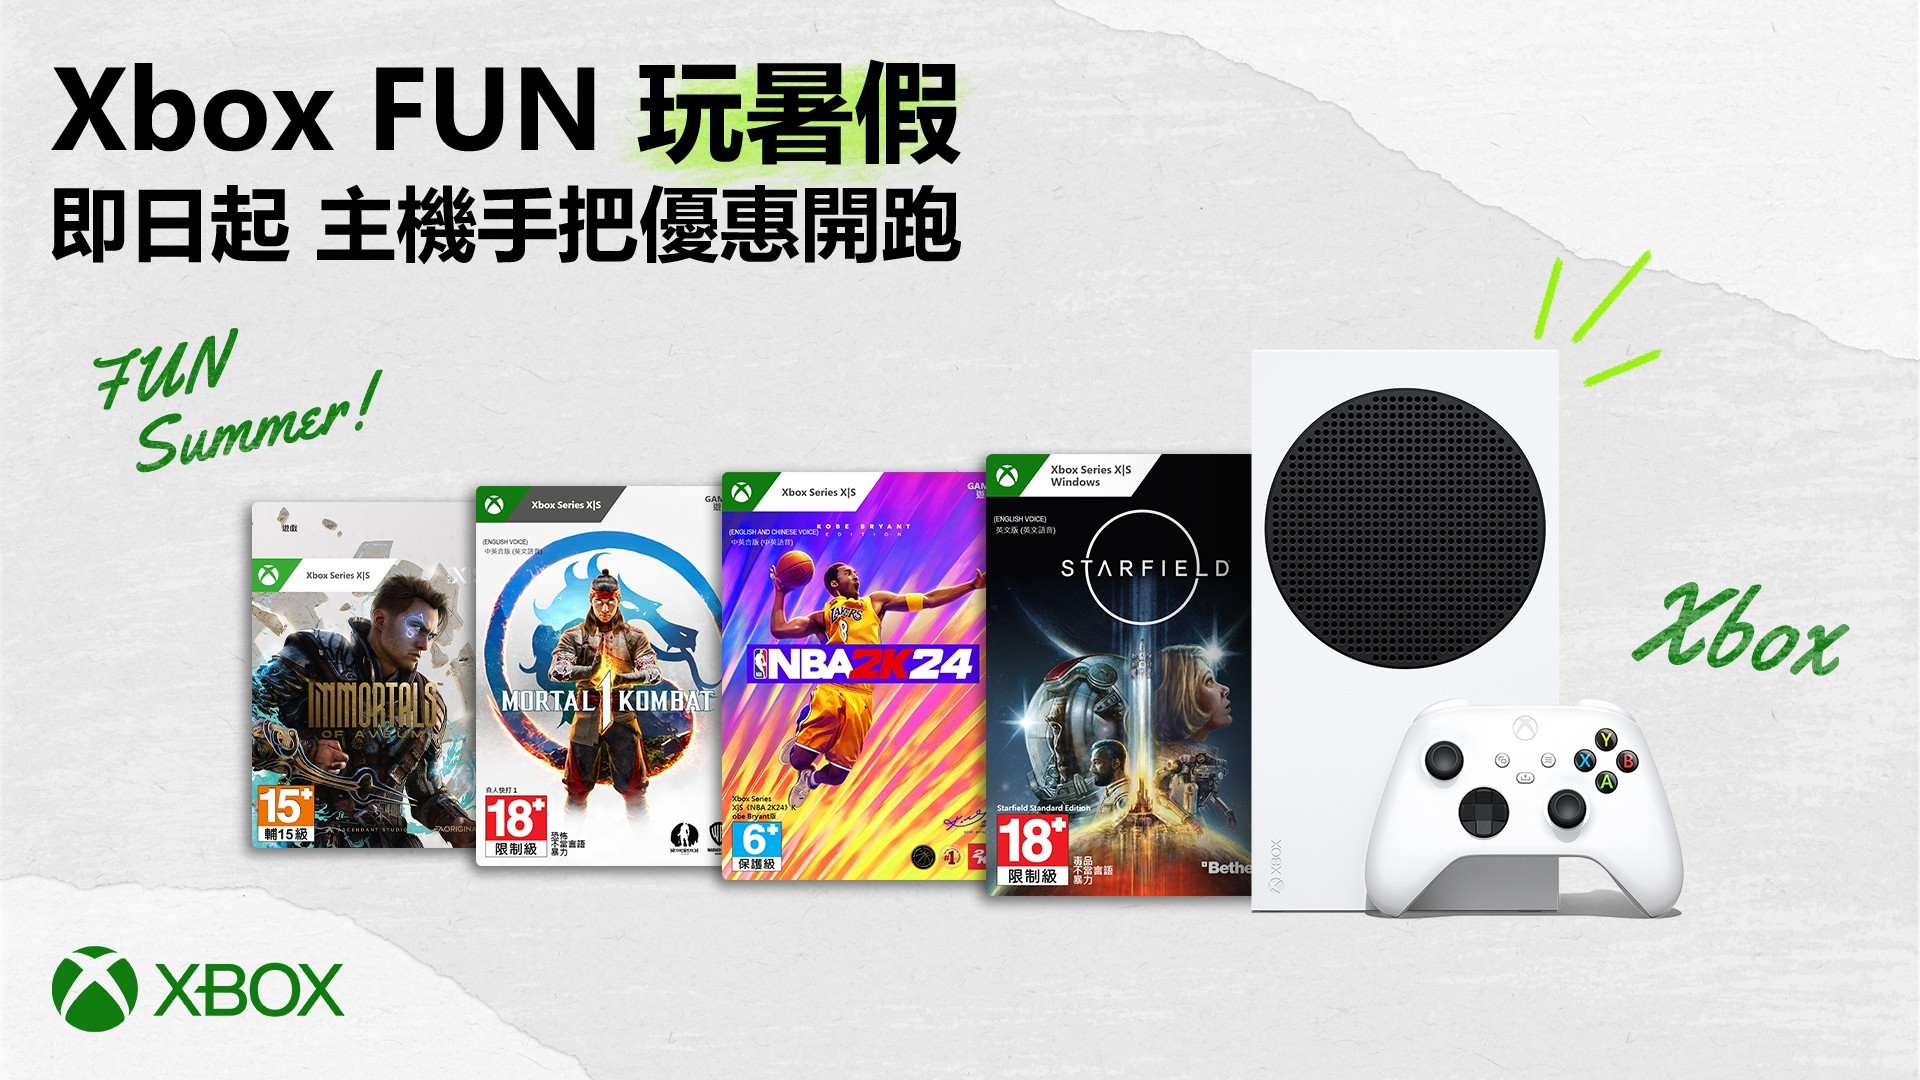 4-Xbox-貼心祭出「FUN-玩暑假」活動：9-月-3-日前於指定授權經銷商購買-Xbox-Series-S-主機（白色款），即可獲得價值新台幣-1500-元的禮物卡；購買指定無線控制器還可現折-300-元